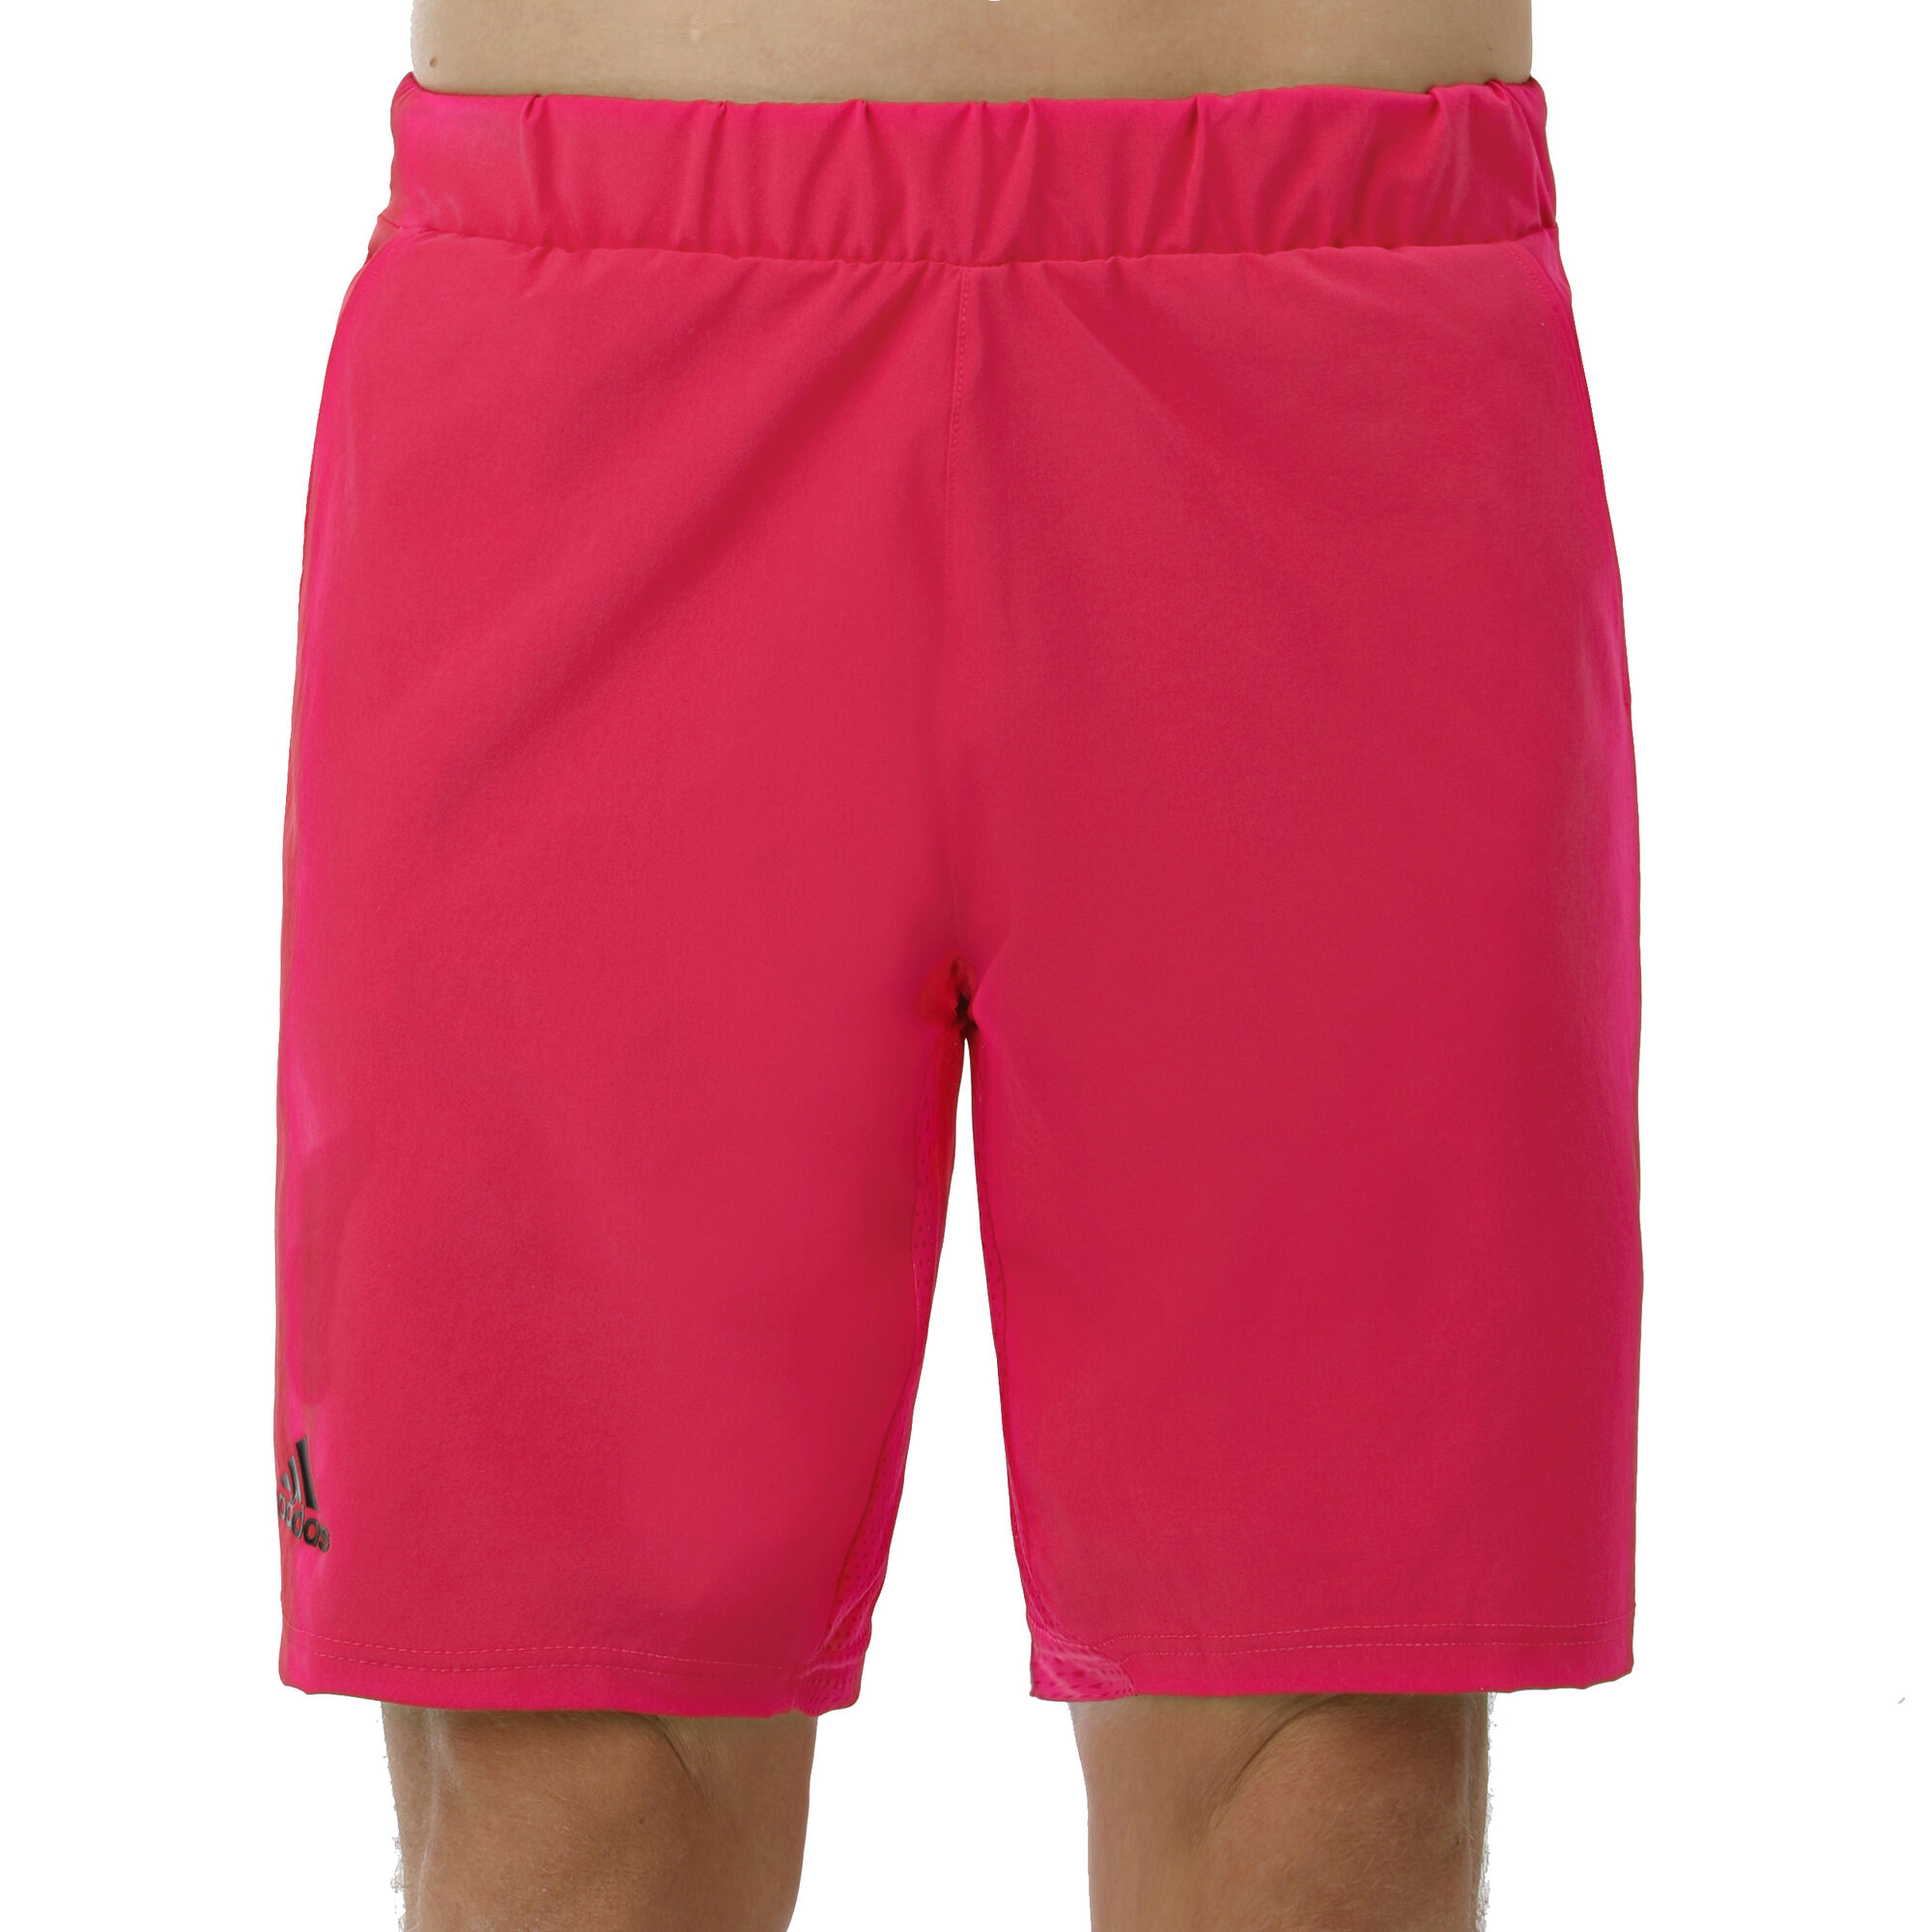 Buy adidas 2in1 Heat Ready Shorts Men Pink online | Tennis Point COM